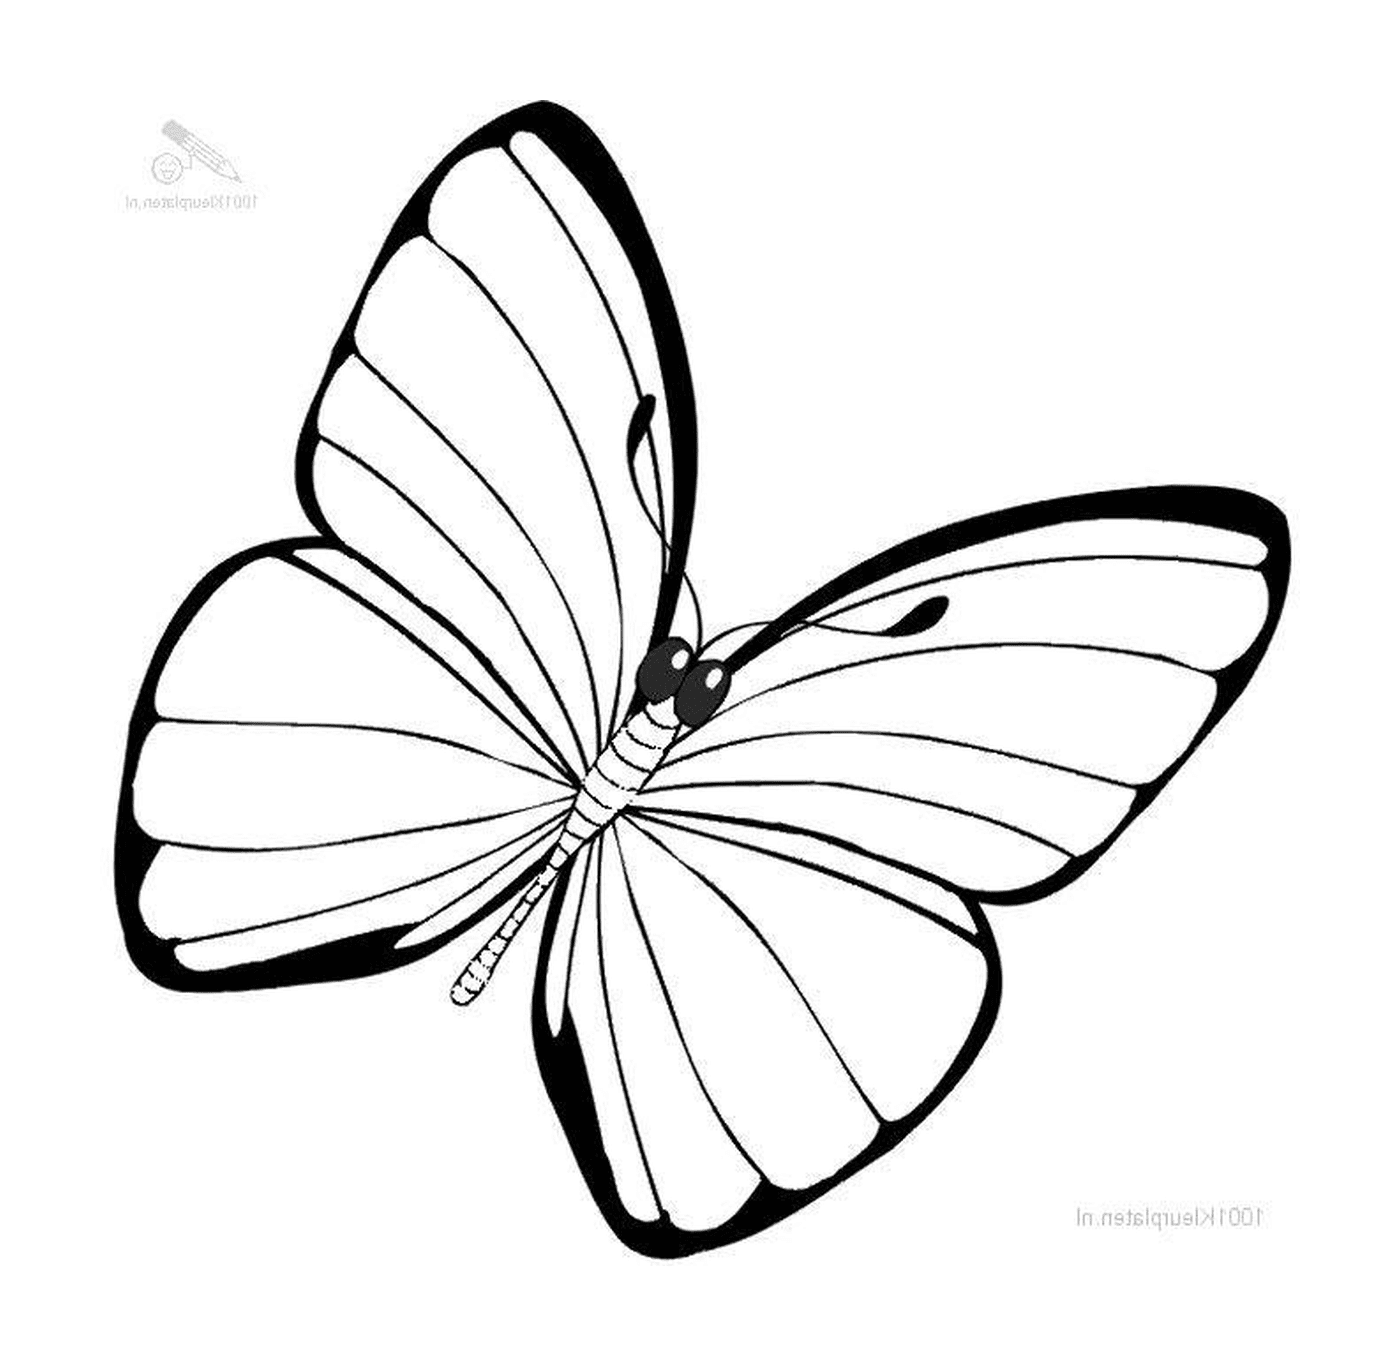  mariposa parpadeante con ligereza 